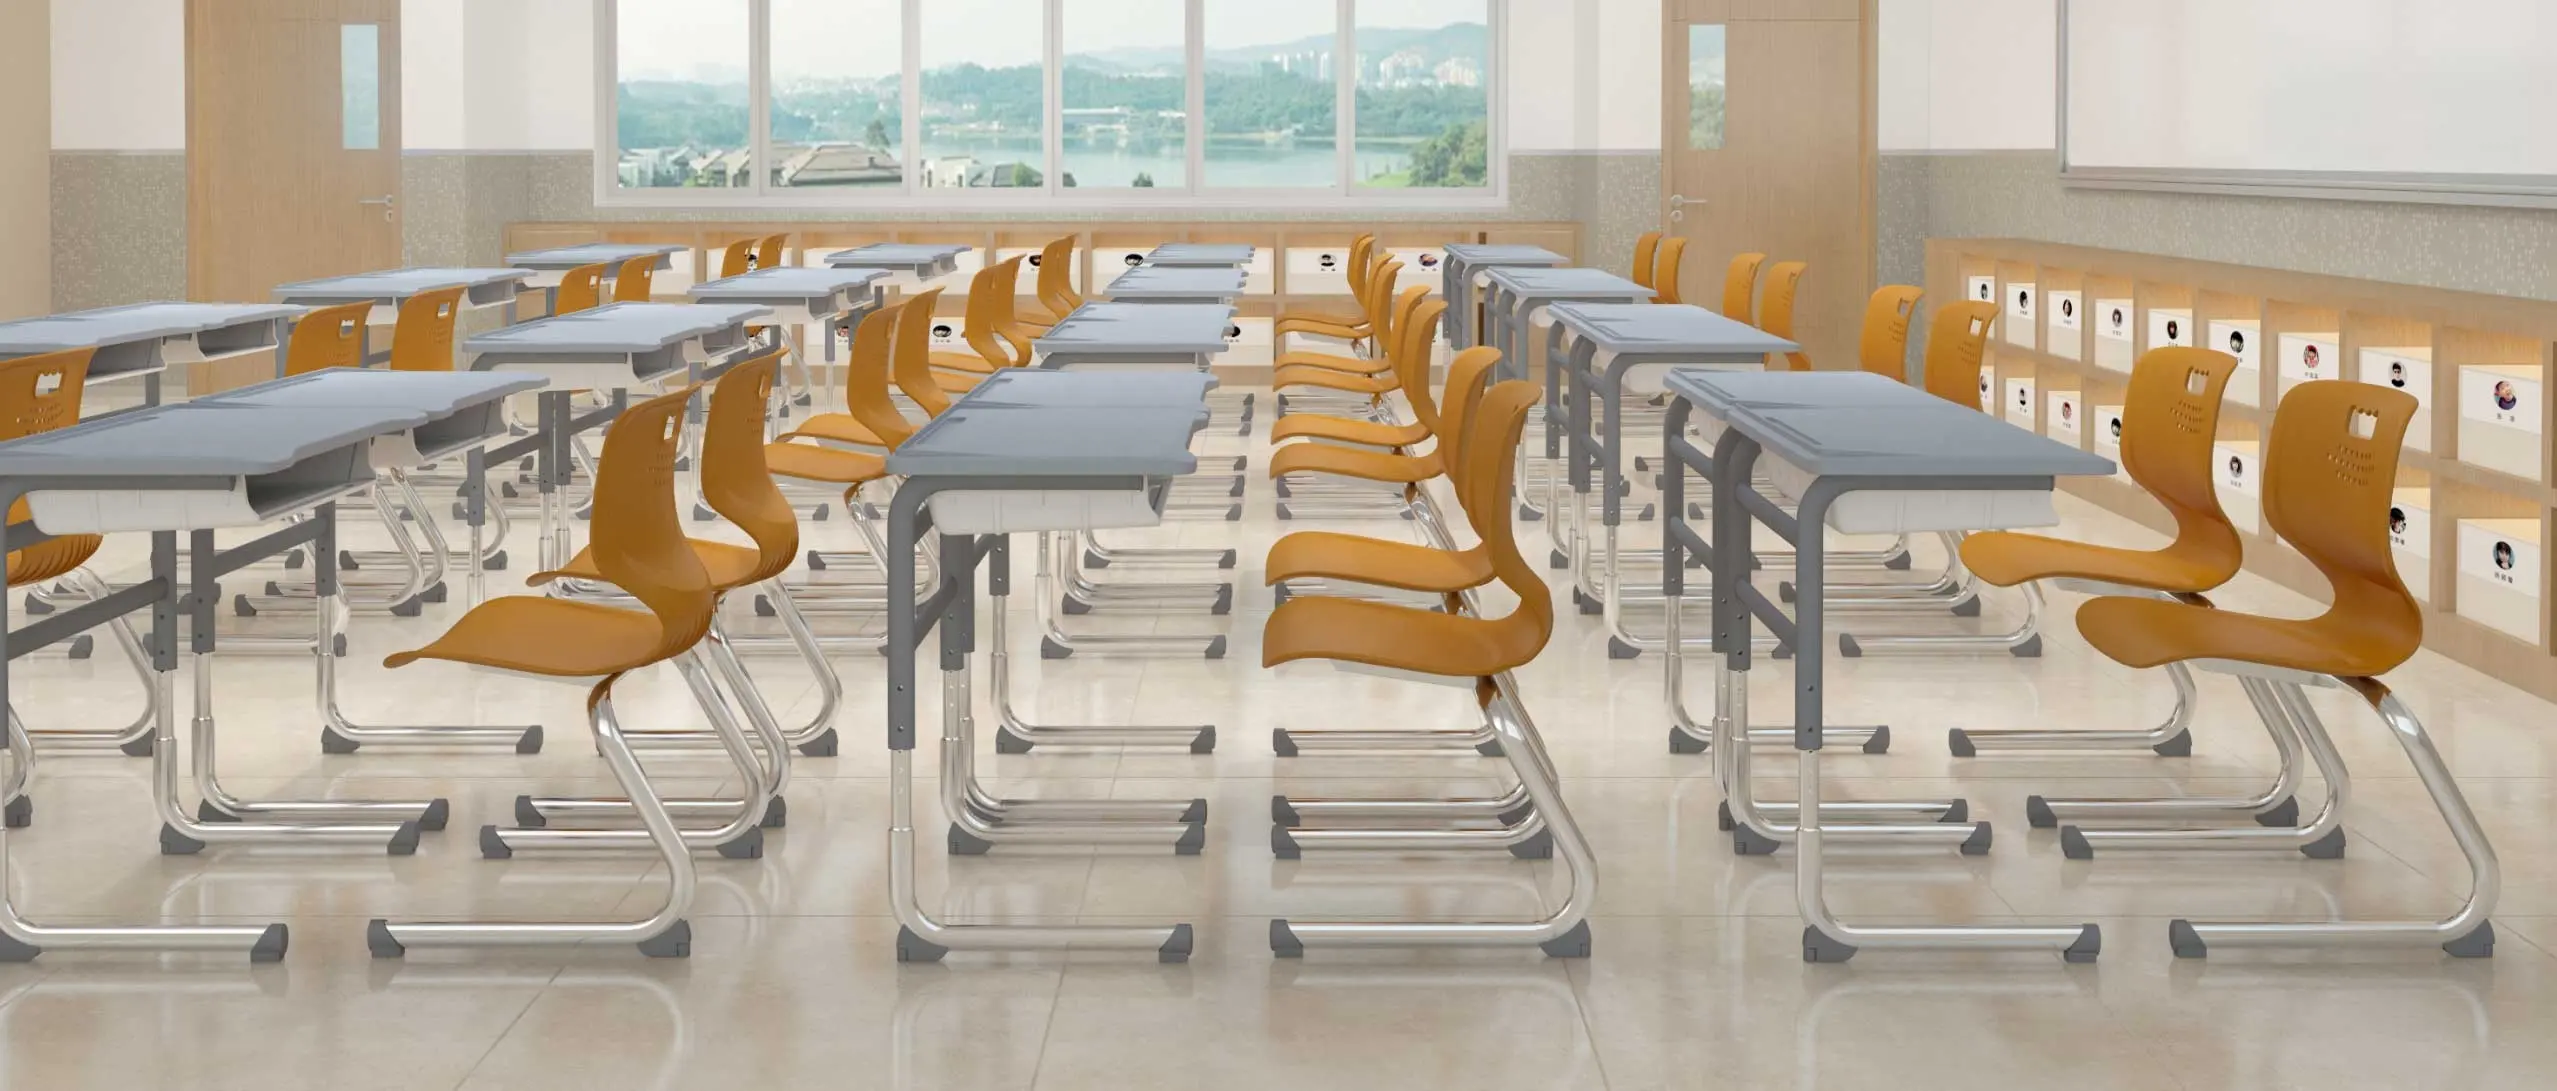 Meja dan kursi pelajar, Set kursi meja murid Modern berkualitas tinggi